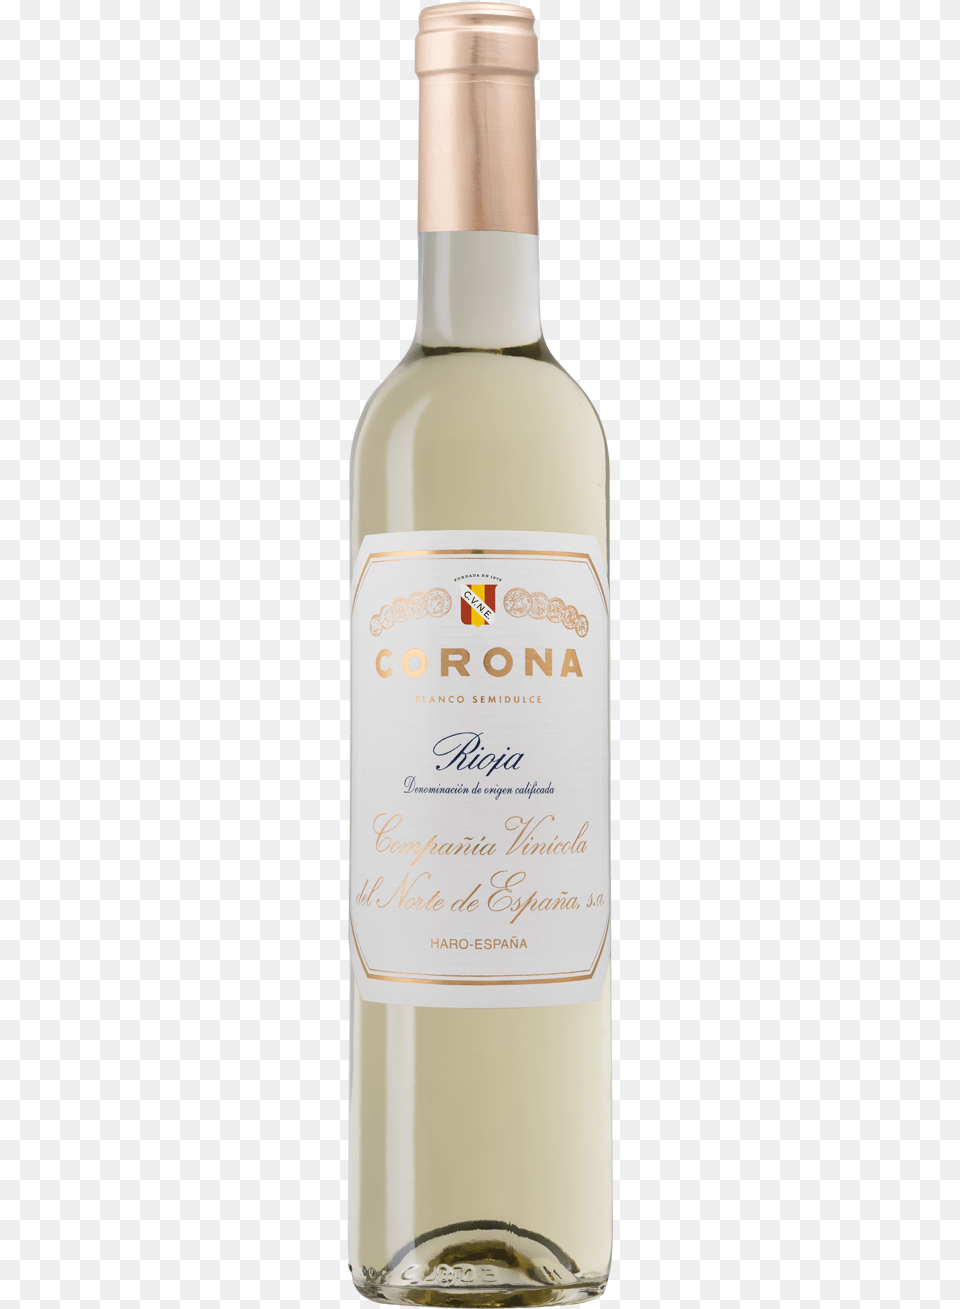 Cvne Corona, Bottle, Alcohol, Beverage, Liquor Png Image